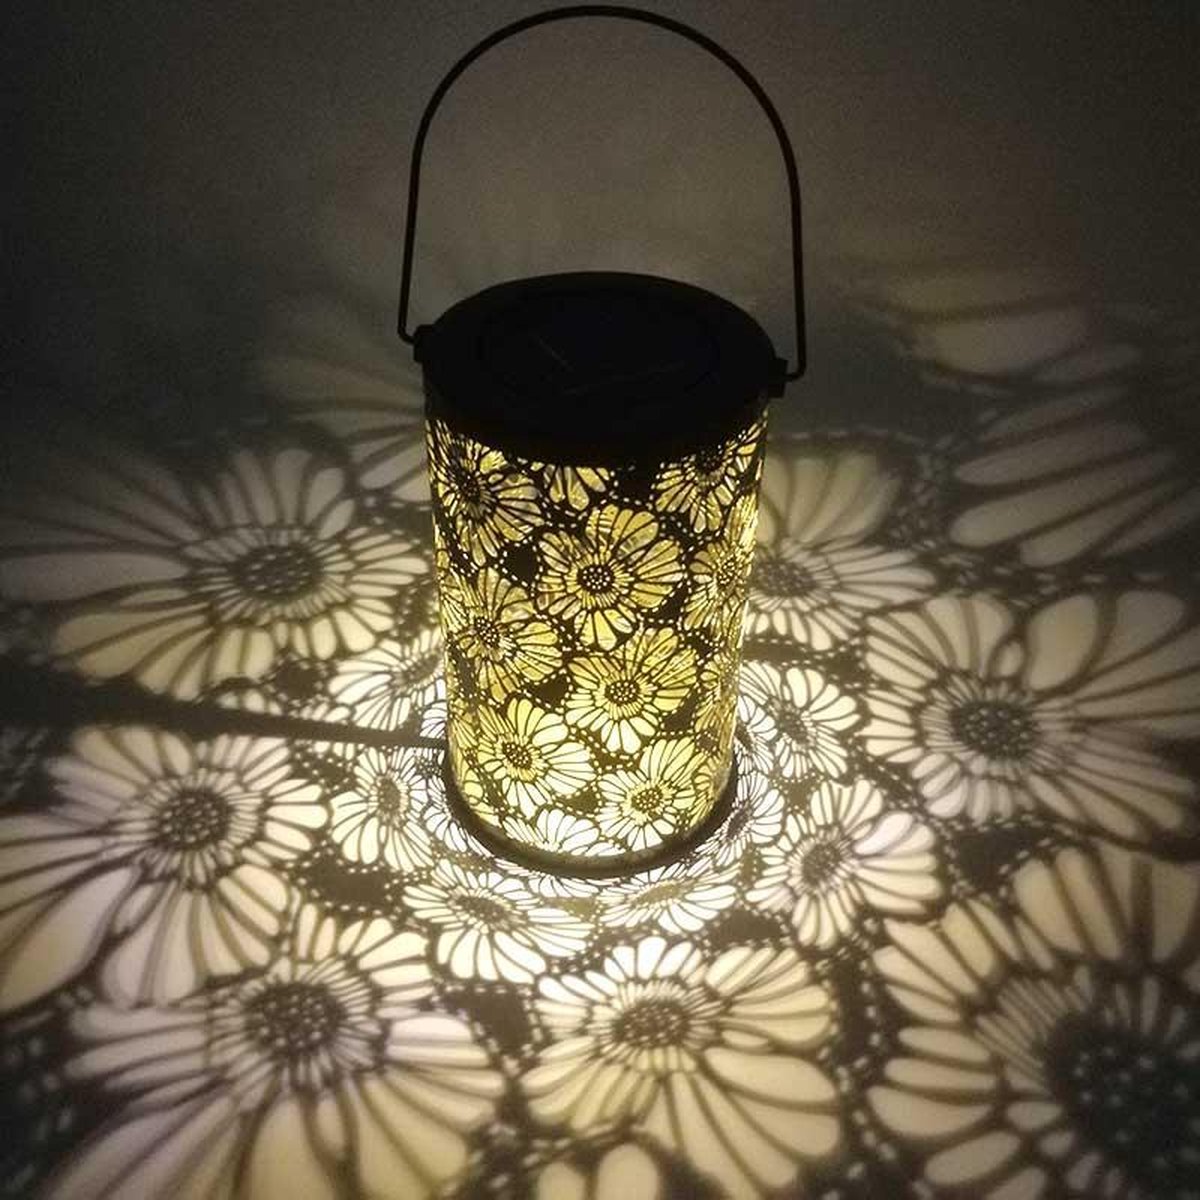 Itagala Design Solar Tafellamp & Hanglamp | Model Flower | Solar Tuinverlichting met accu | 6 tot 8 uur sfeer en gemak met nachtsensor | kleur black